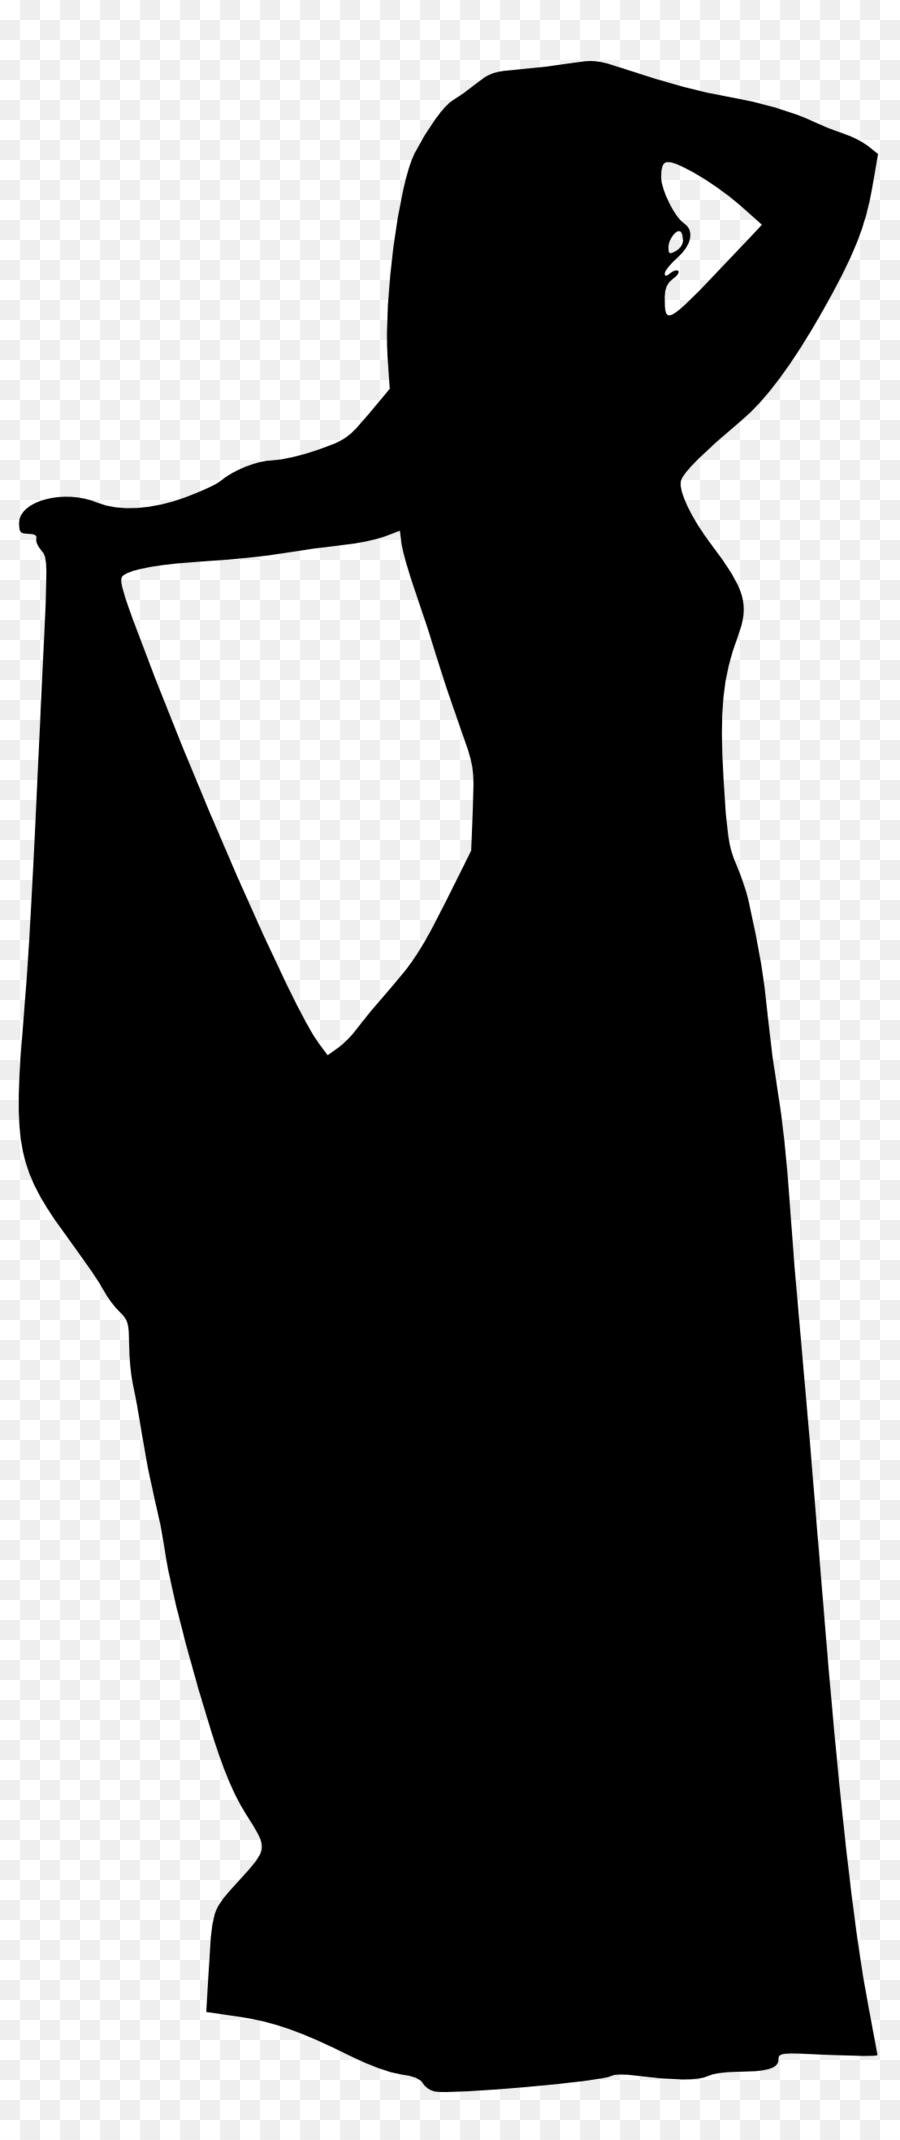 Silhouette Frau Monochrom-Fotografie - Frau silhouette